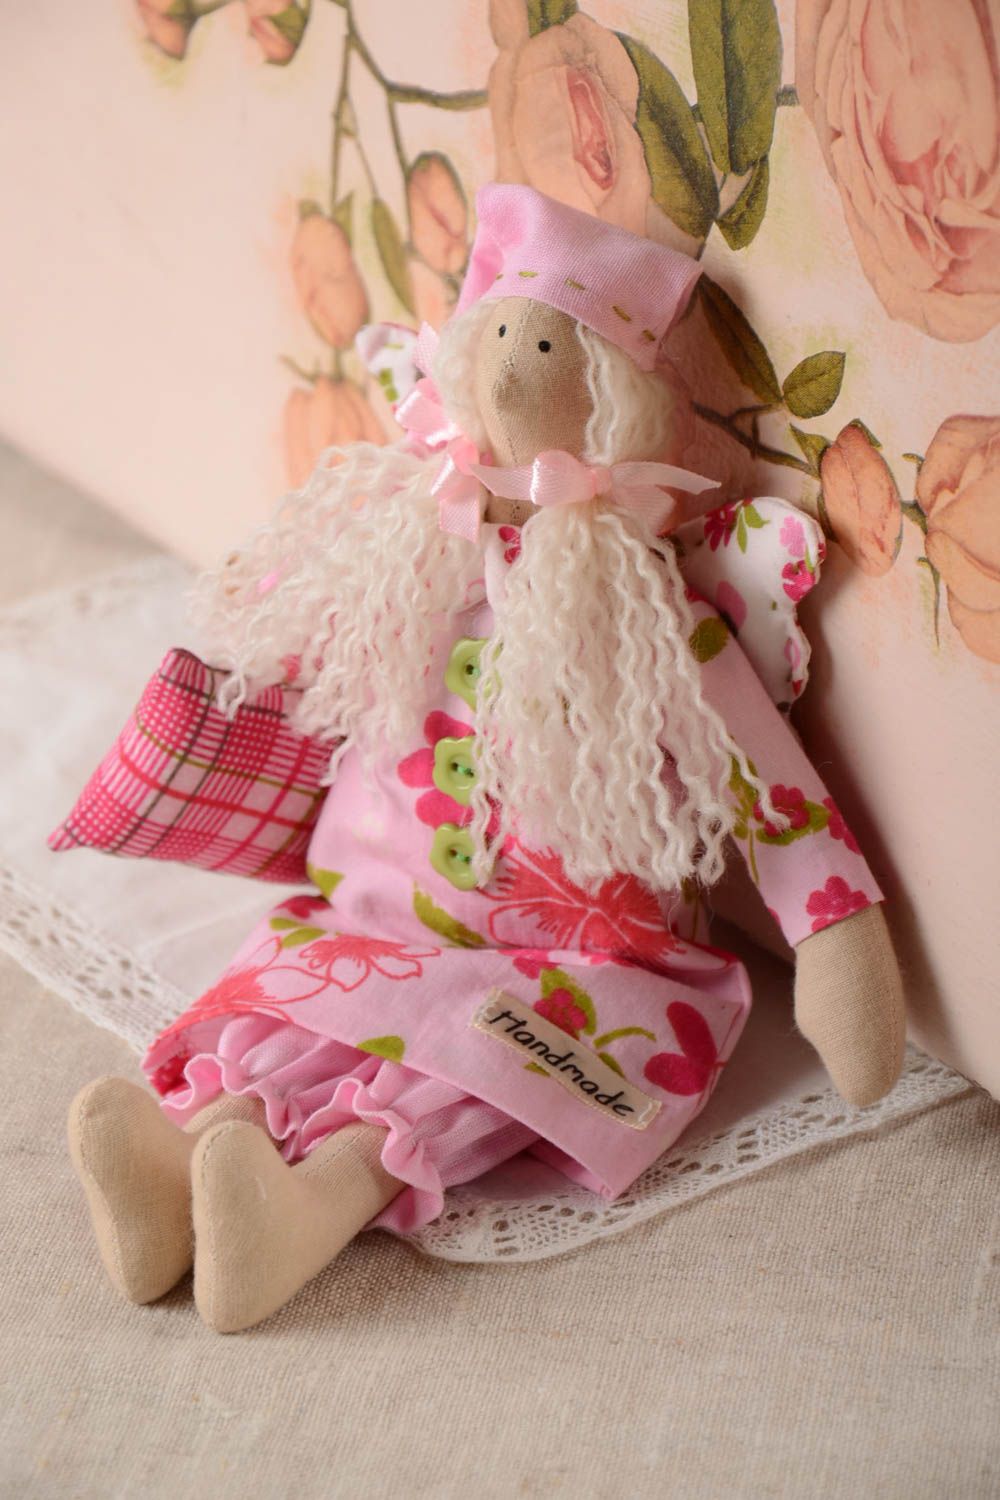 Beautiful handmade interior doll fabric soft toy rag doll designs gift ideas photo 1